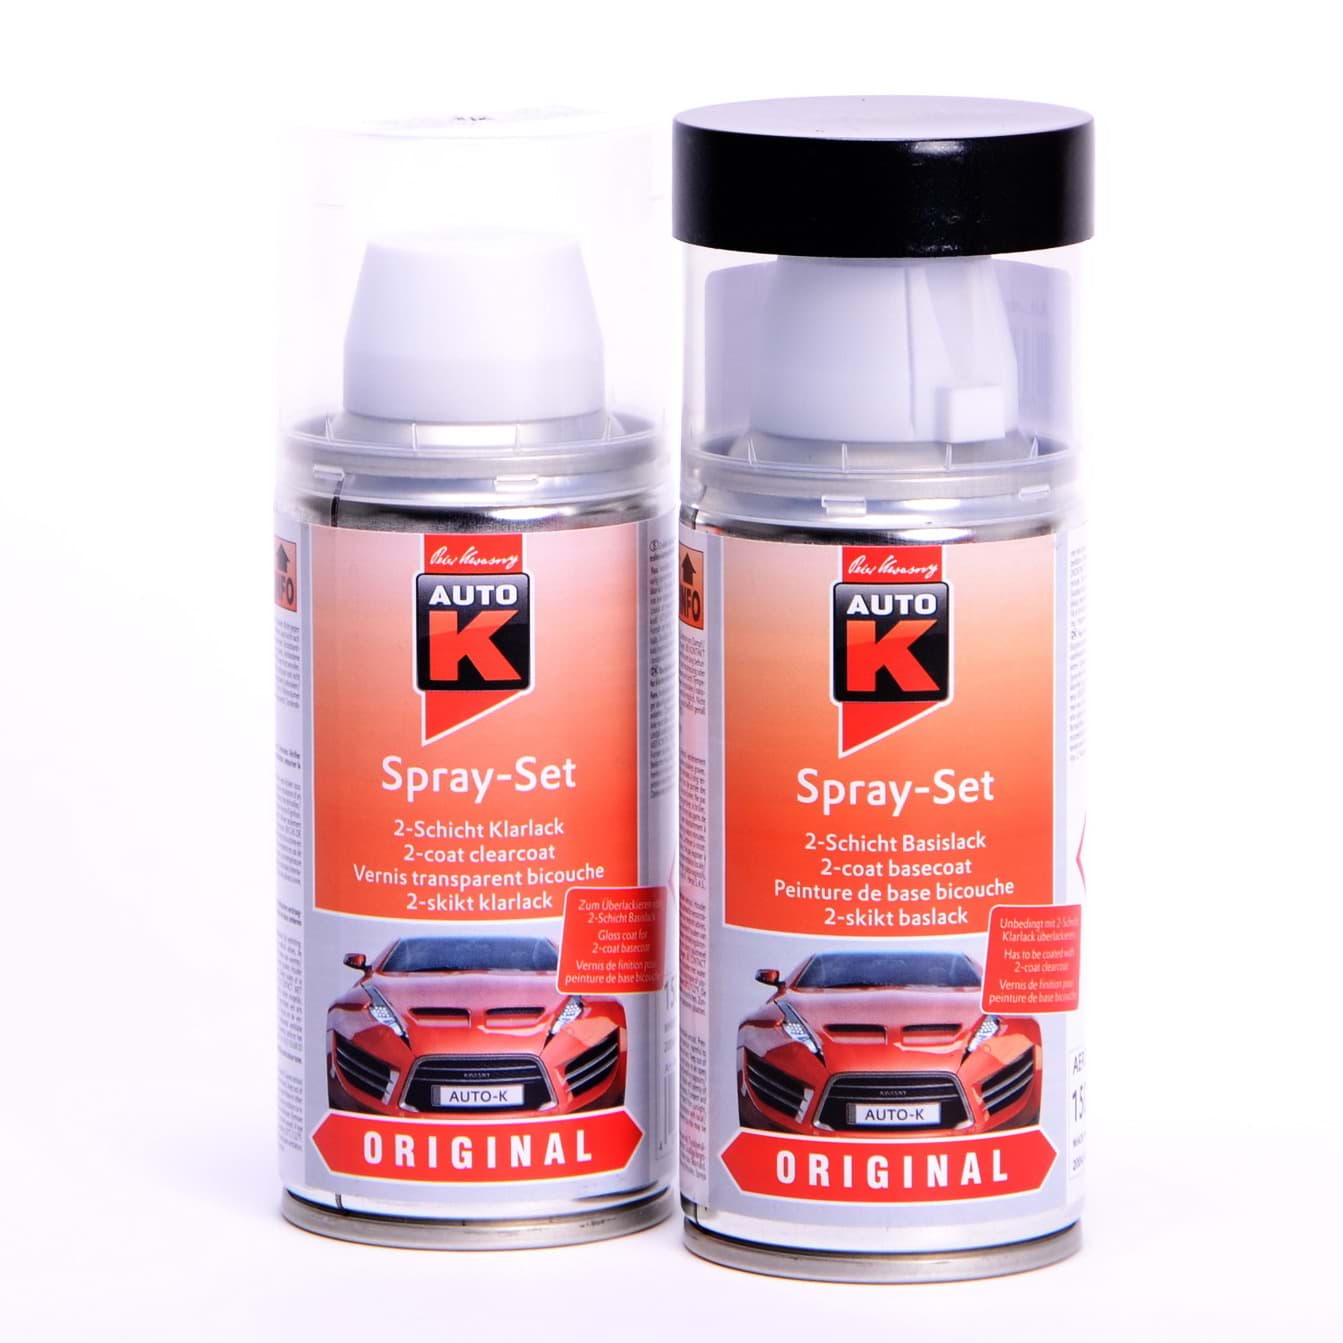 Auto-K Spray-Set Autolack für Volkswagen, VW, Audi LD6T Electronicgrün met 20779 resmi